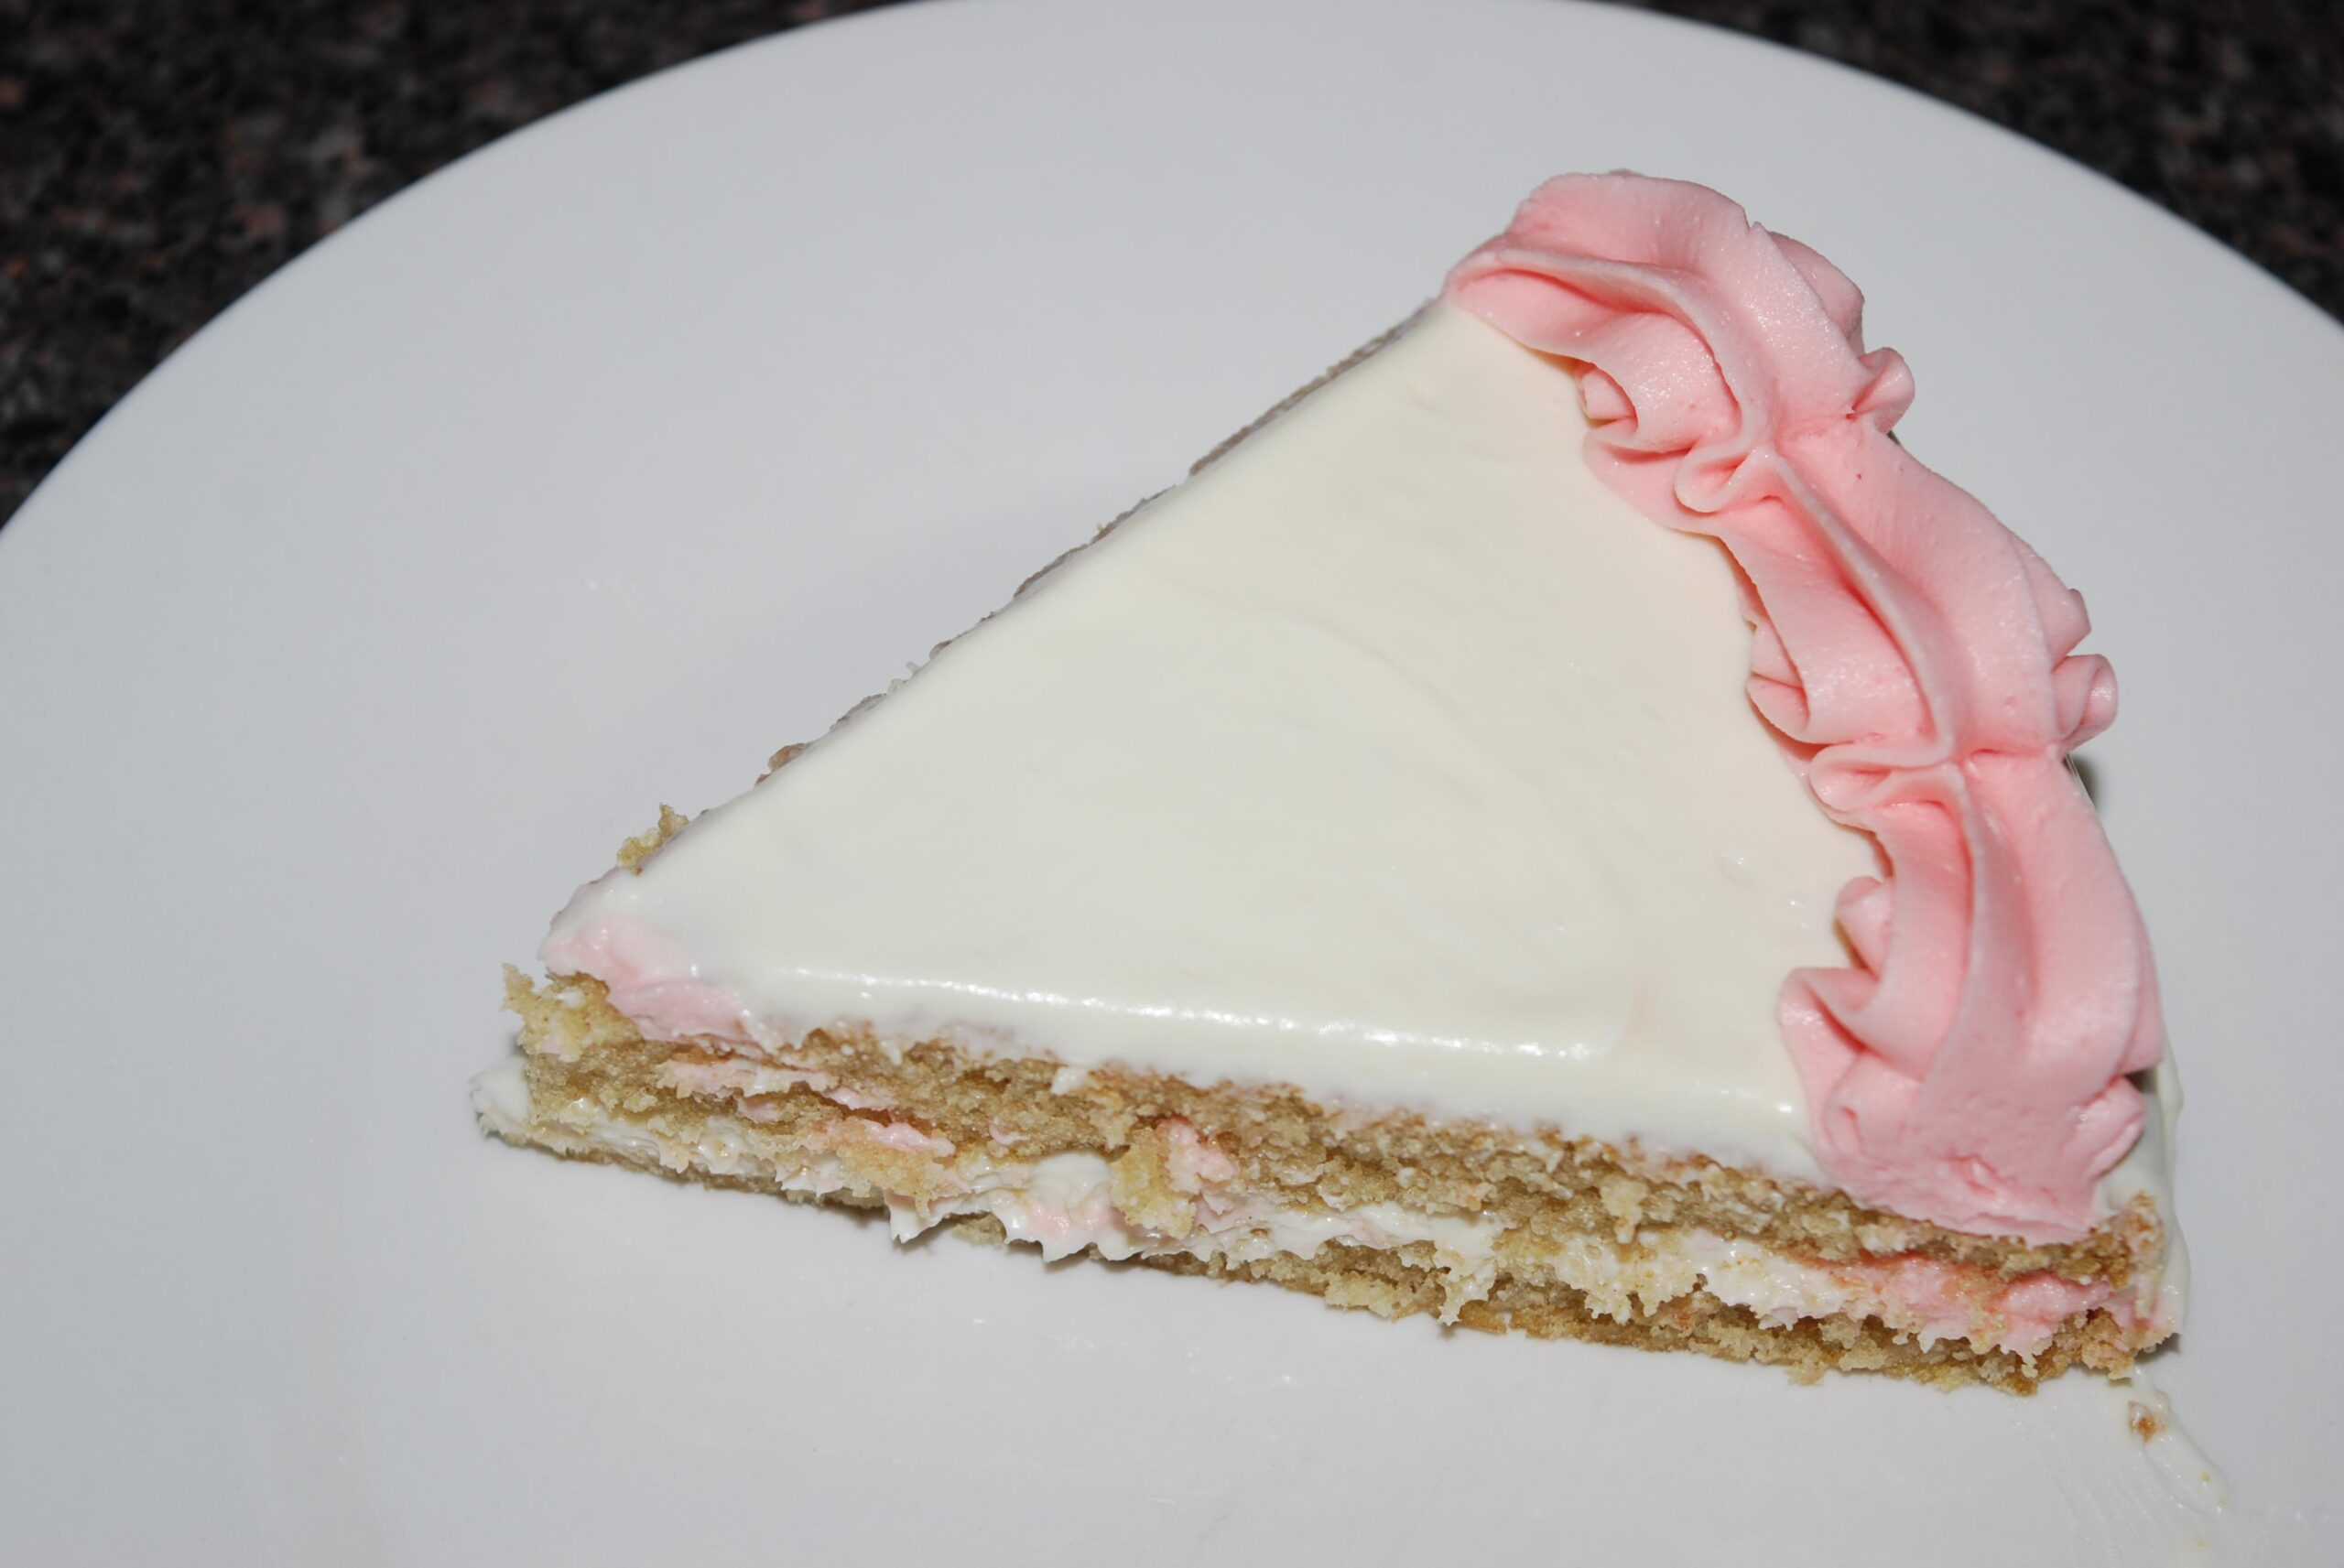  No moo, no worries: Enjoy a slice of Vegan Vanilla Cake